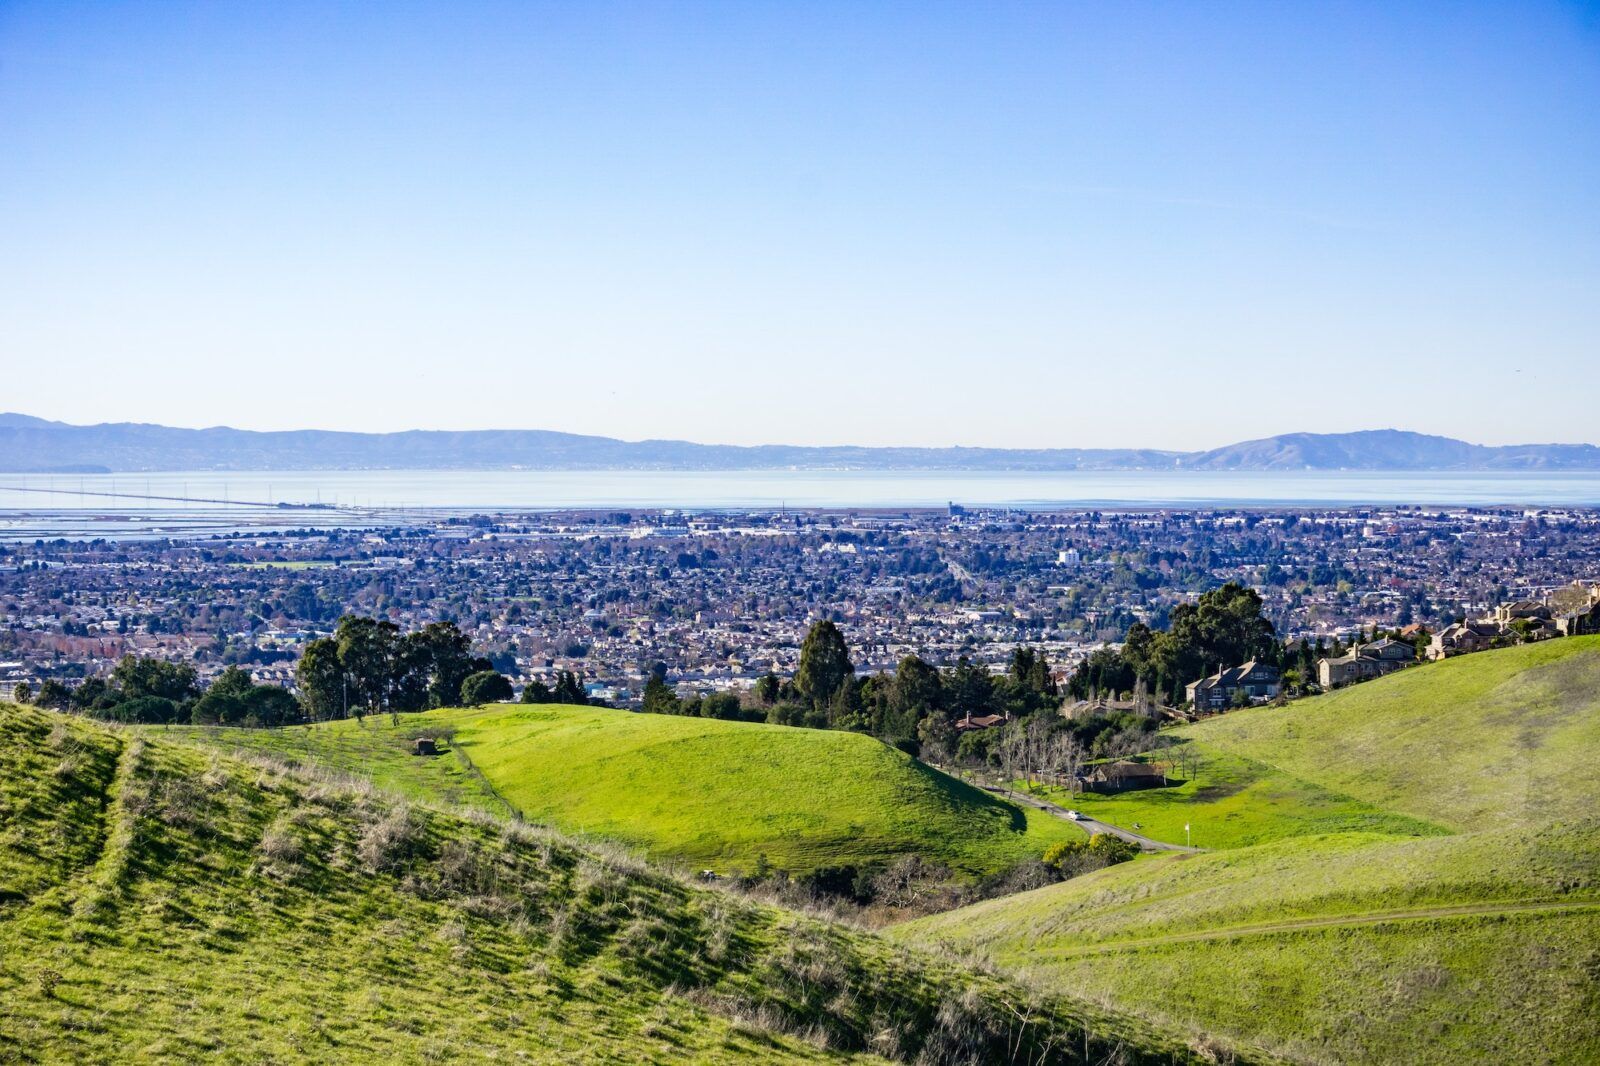 View towards the towns of east bay, San Francisco bay area, Hayward, California